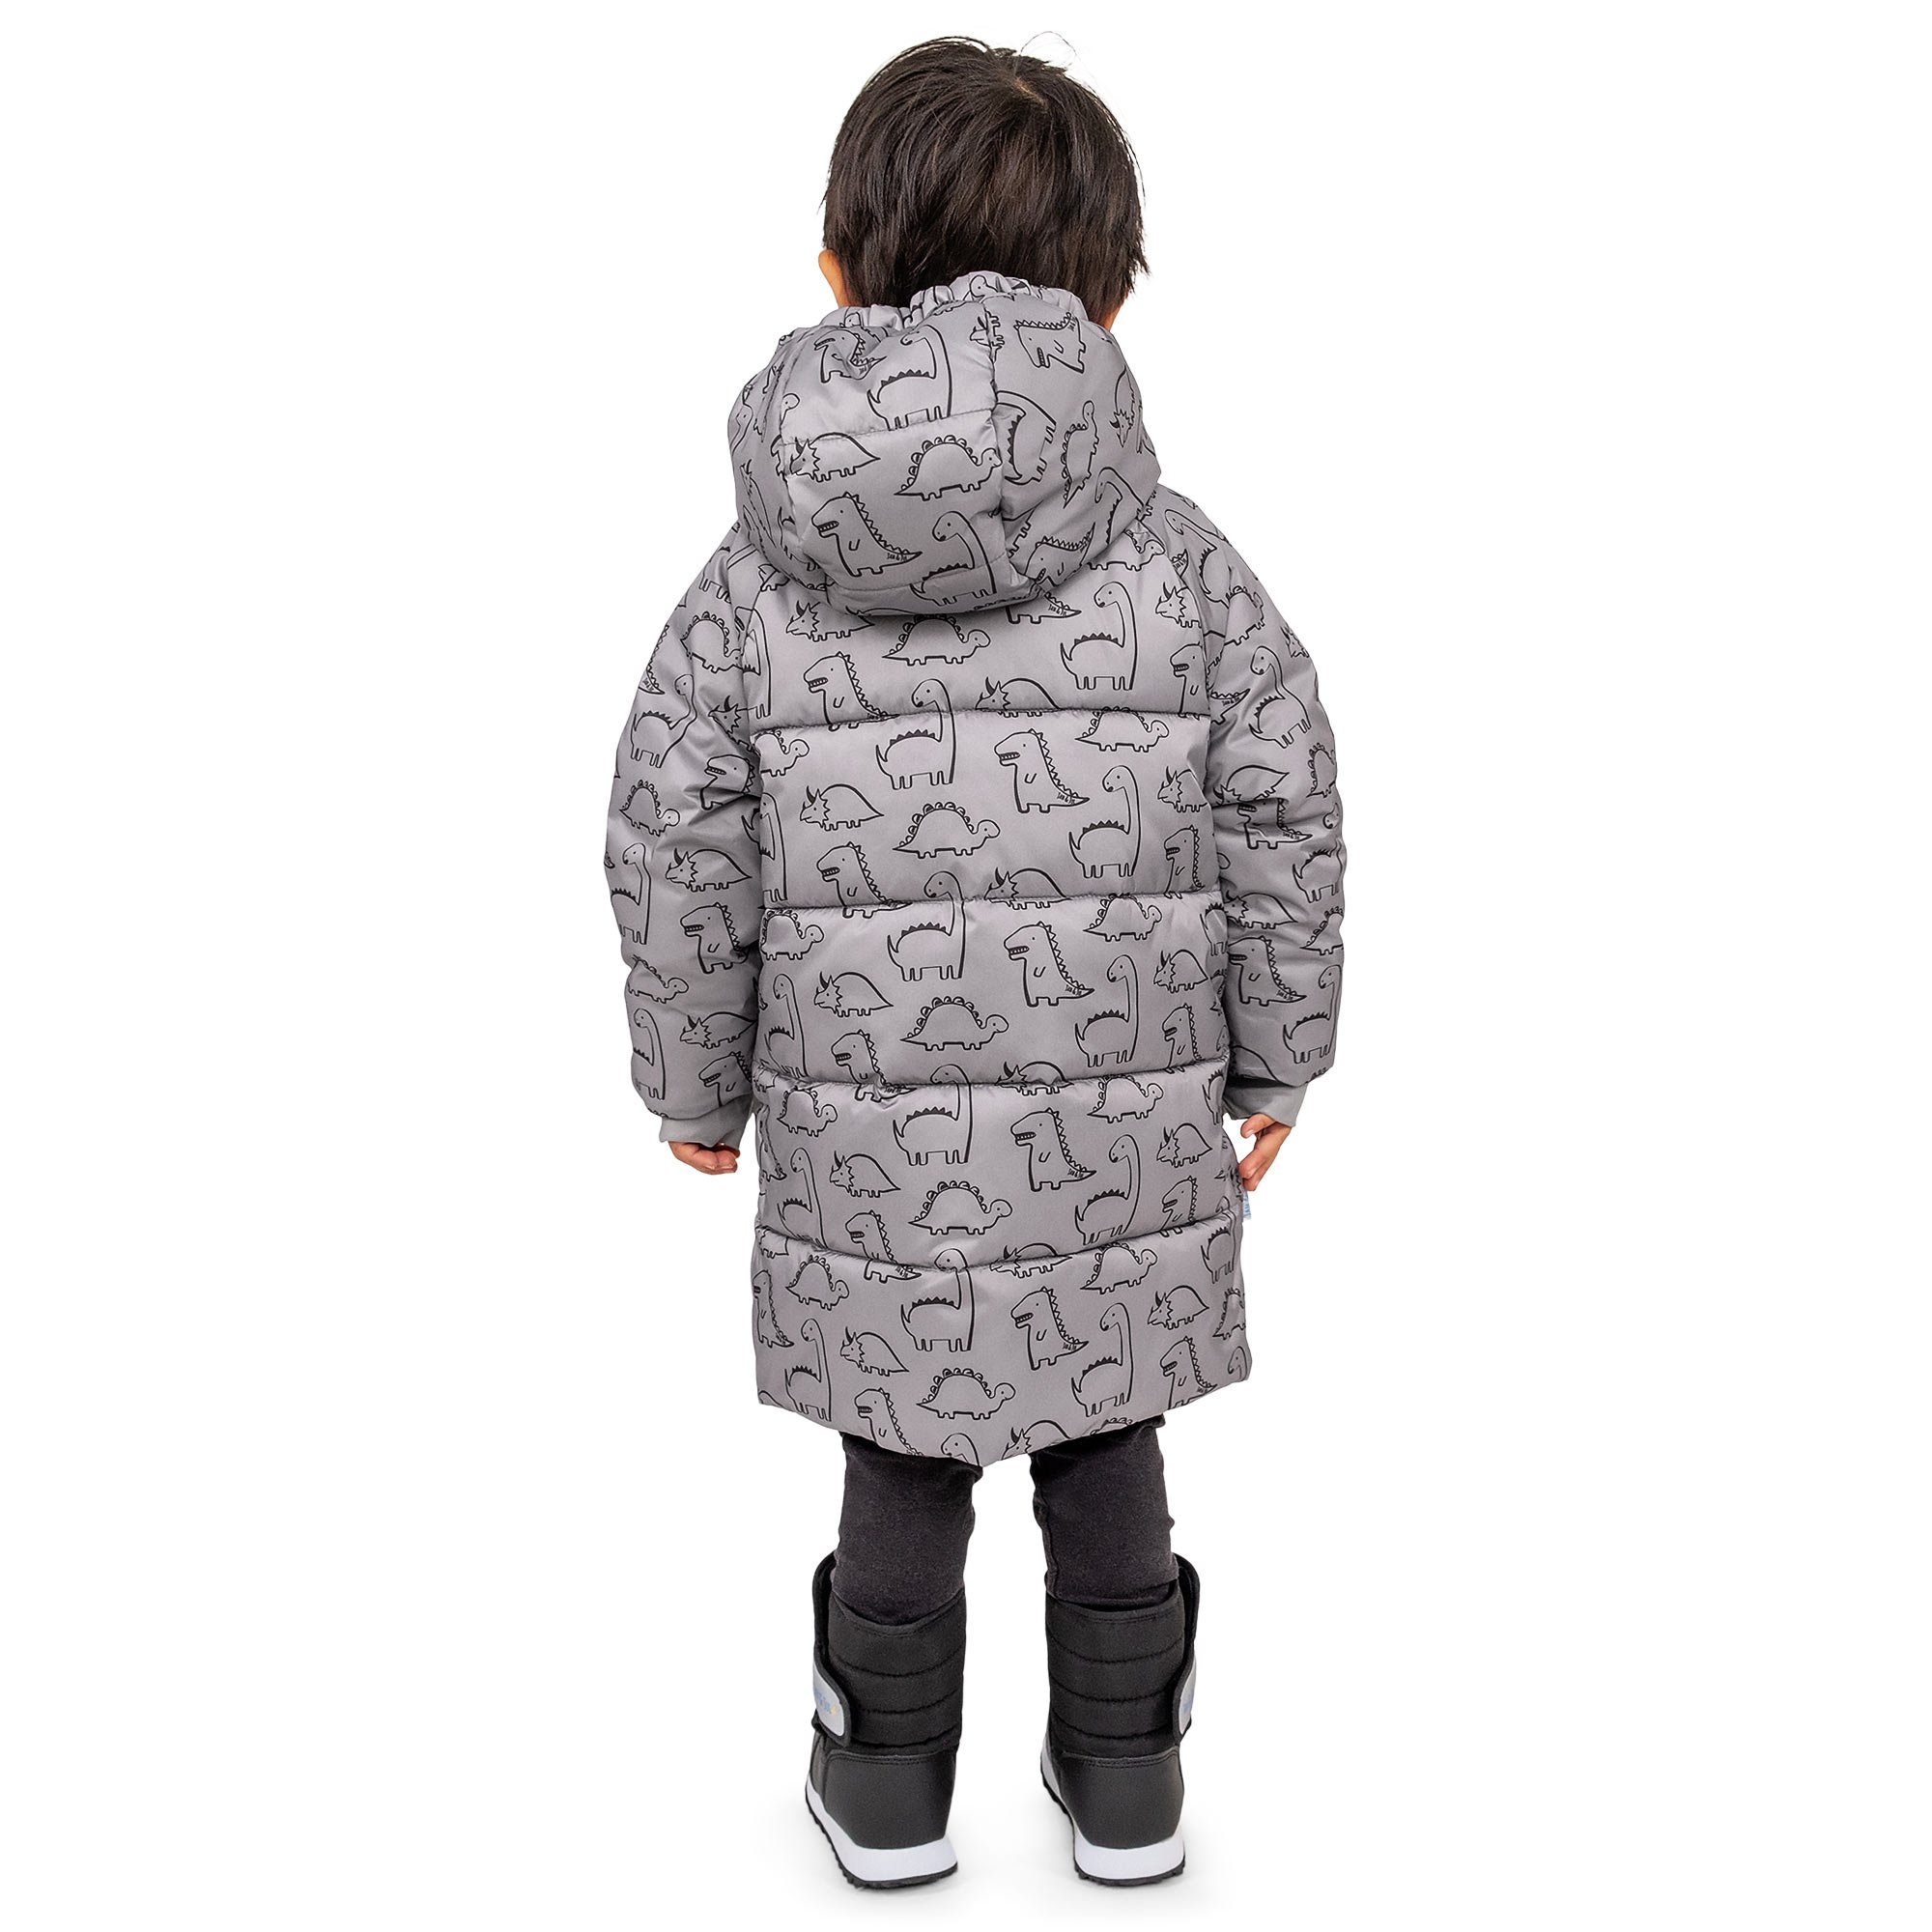 Kids Winter Coats | Glacier Jul Jan Snow | Insulated Jacket & Dino